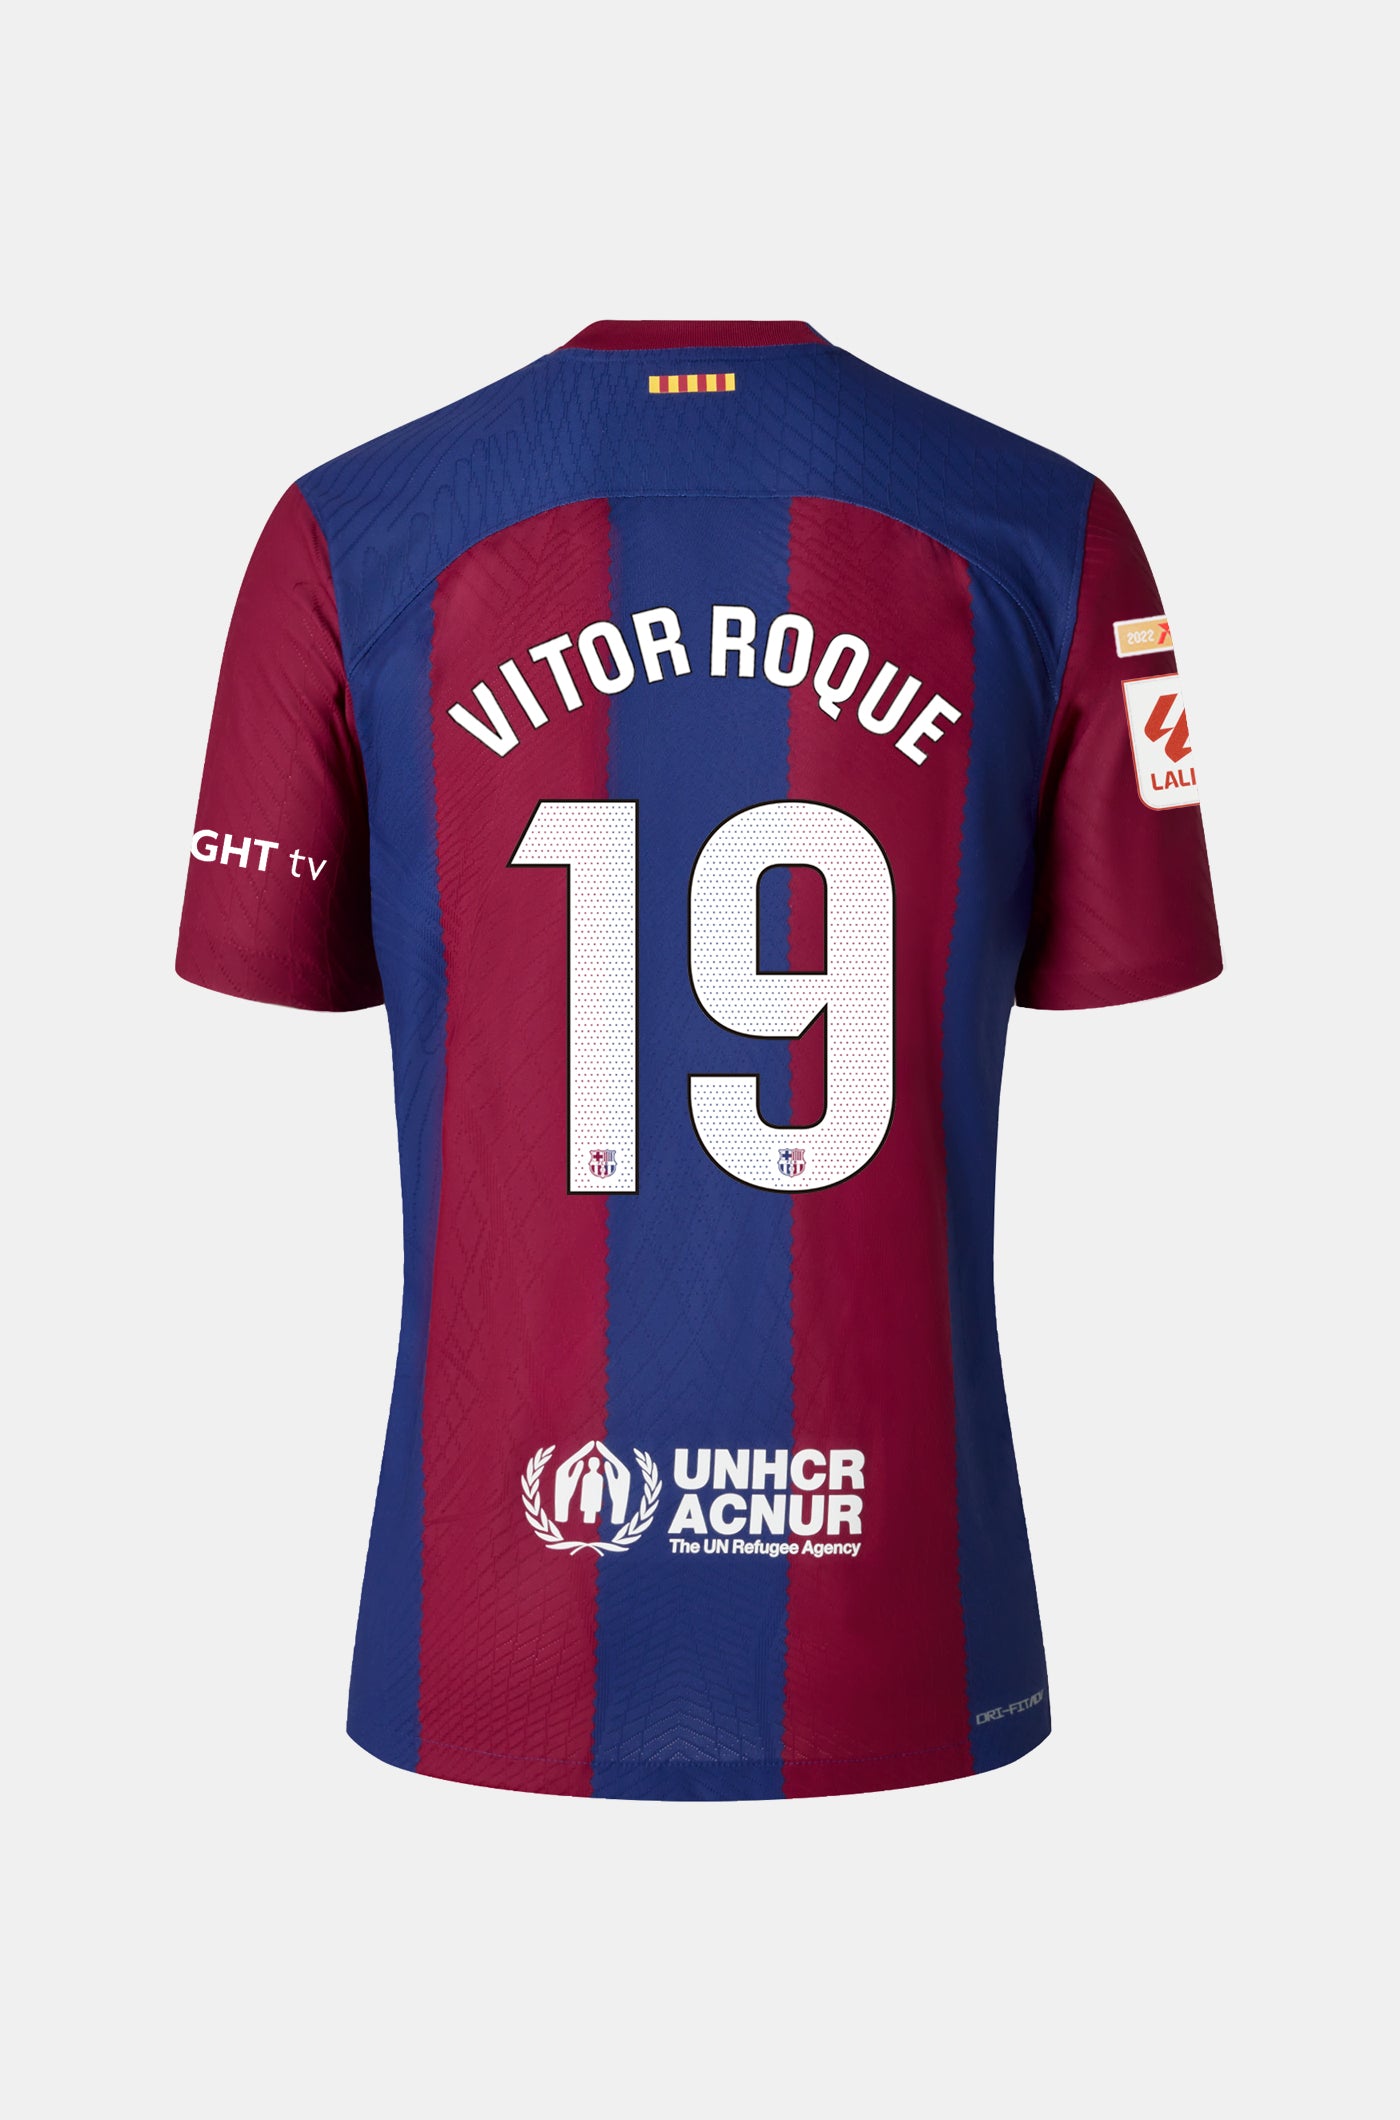 LFP FC Barcelona home shirt 23/24 Player's Edition - VITOR ROQUE